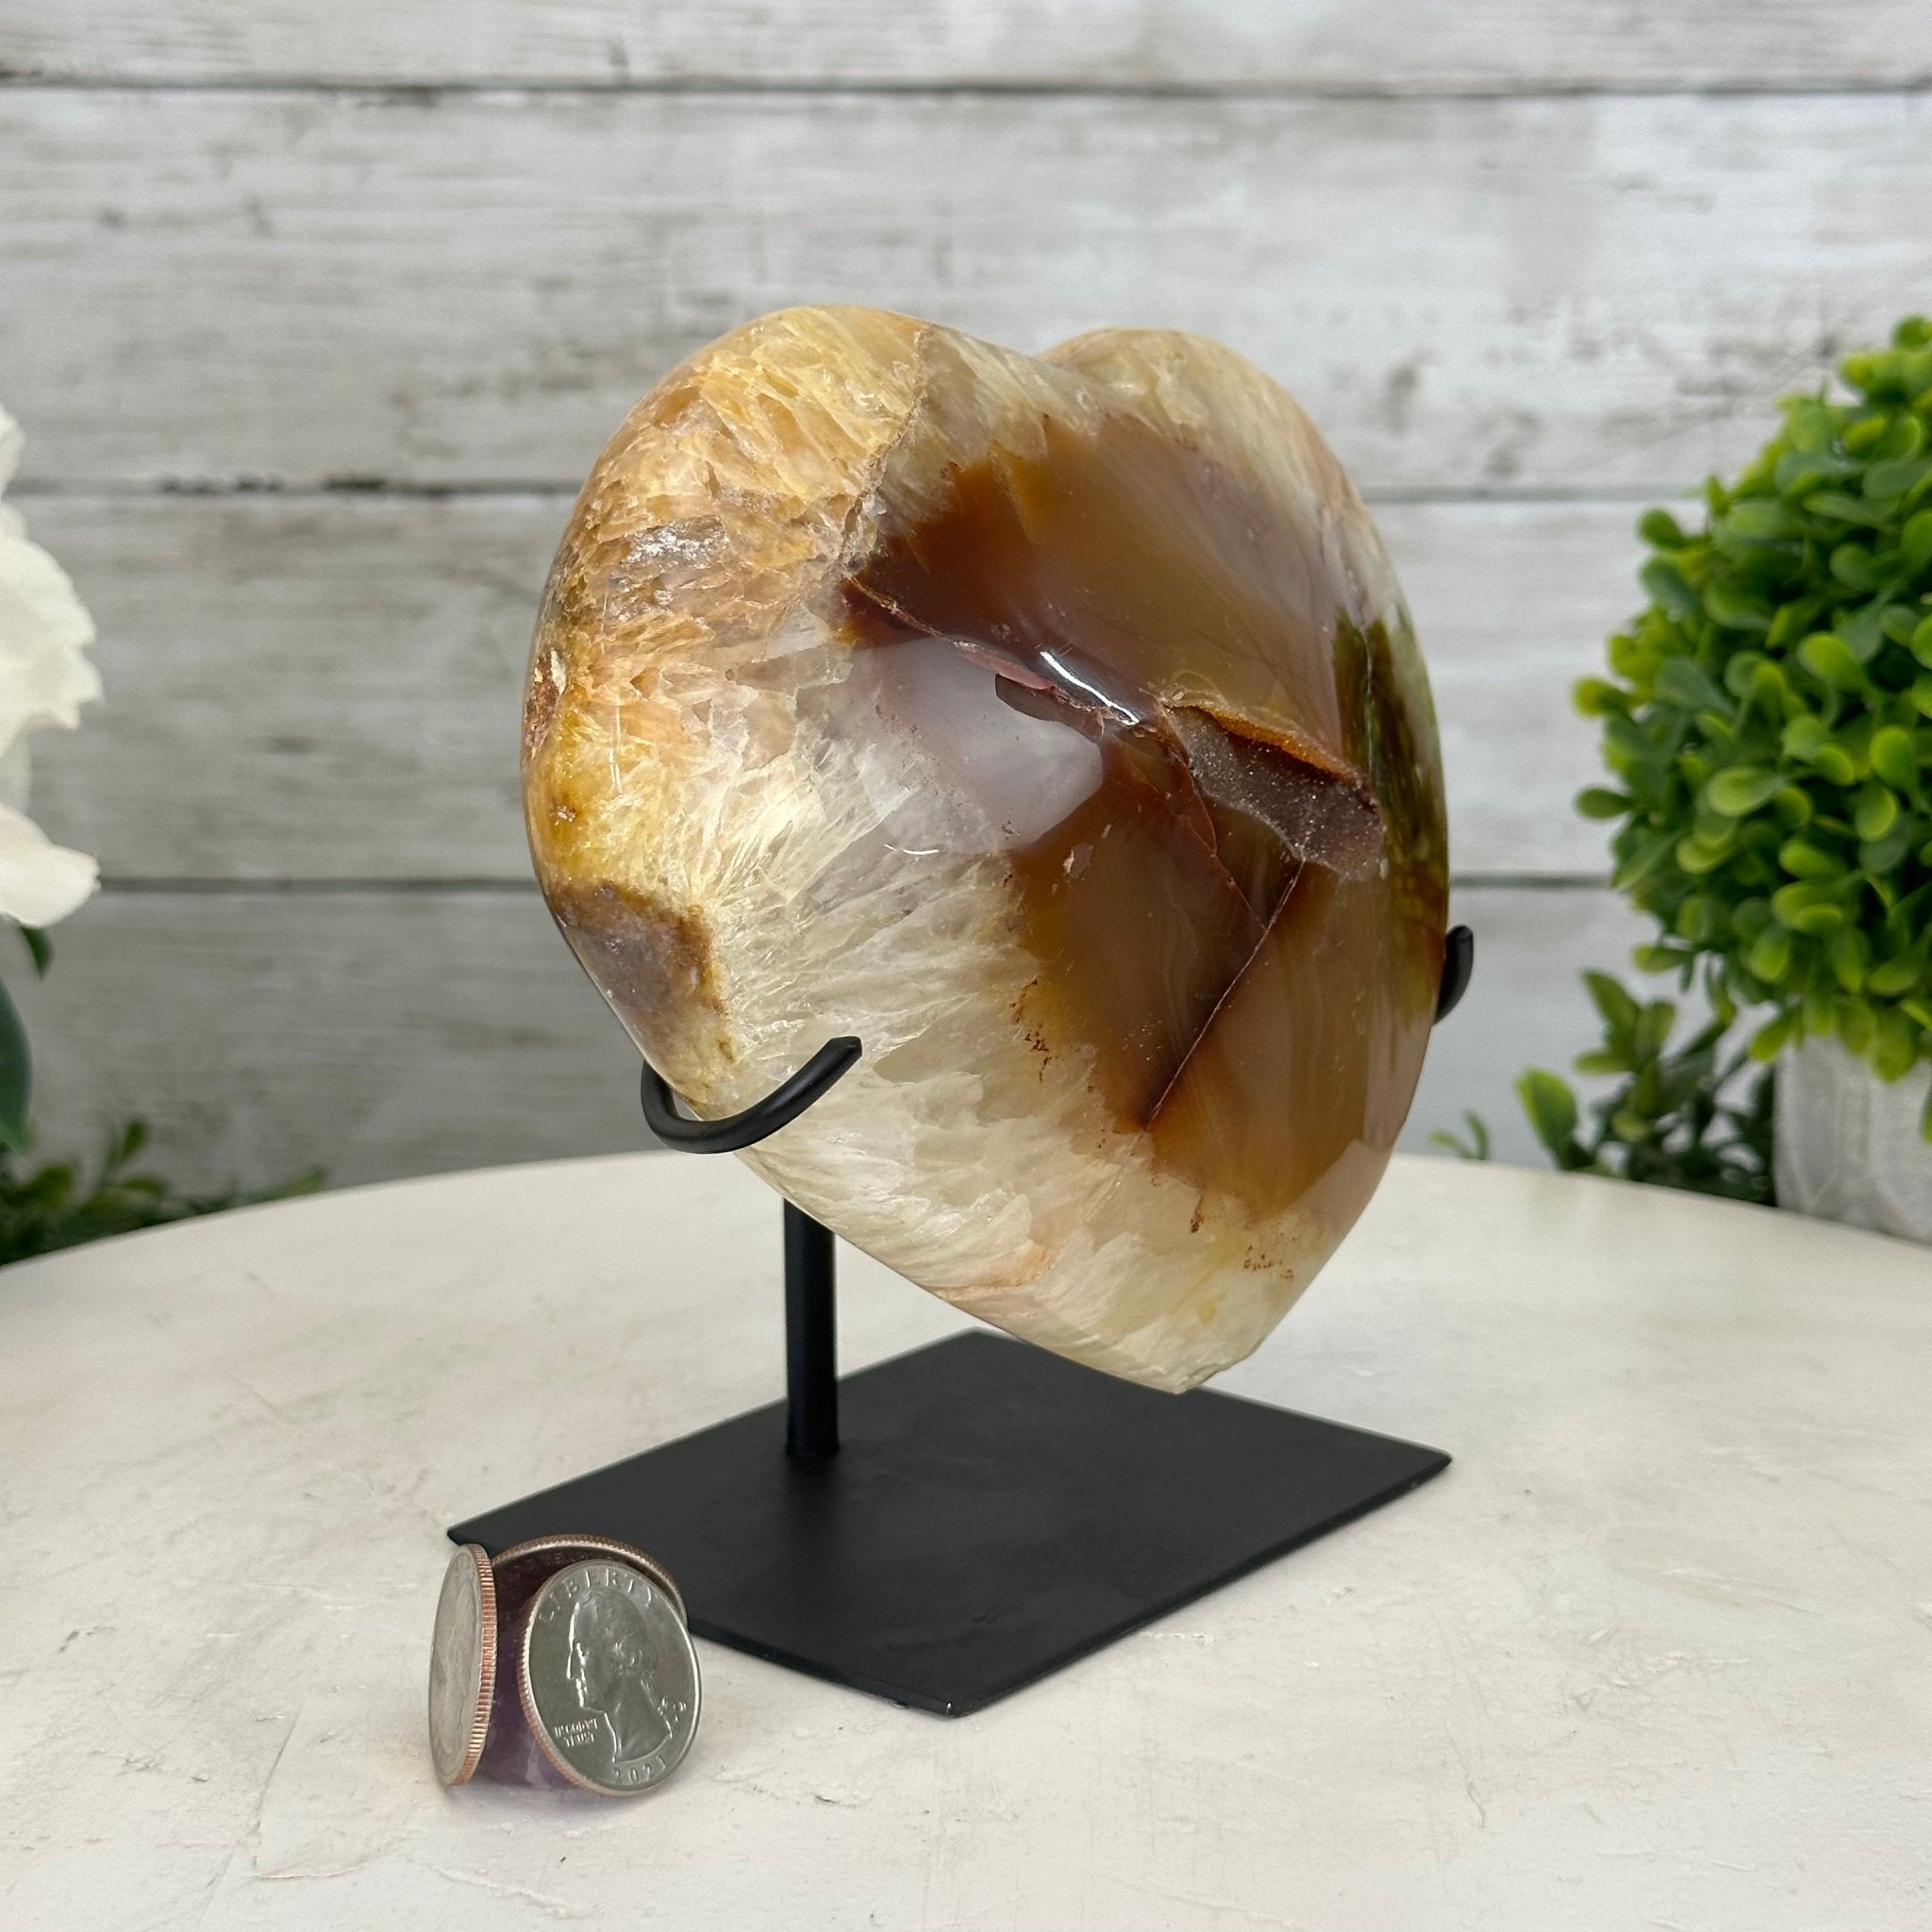 Polished Agate Heart Geode on a Metal Stand, 3.6 lbs & 6" Tall, Model #5468-0061 by Brazil Gems - Brazil GemsBrazil GemsPolished Agate Heart Geode on a Metal Stand, 3.6 lbs & 6" Tall, Model #5468-0061 by Brazil GemsHearts5468-0061